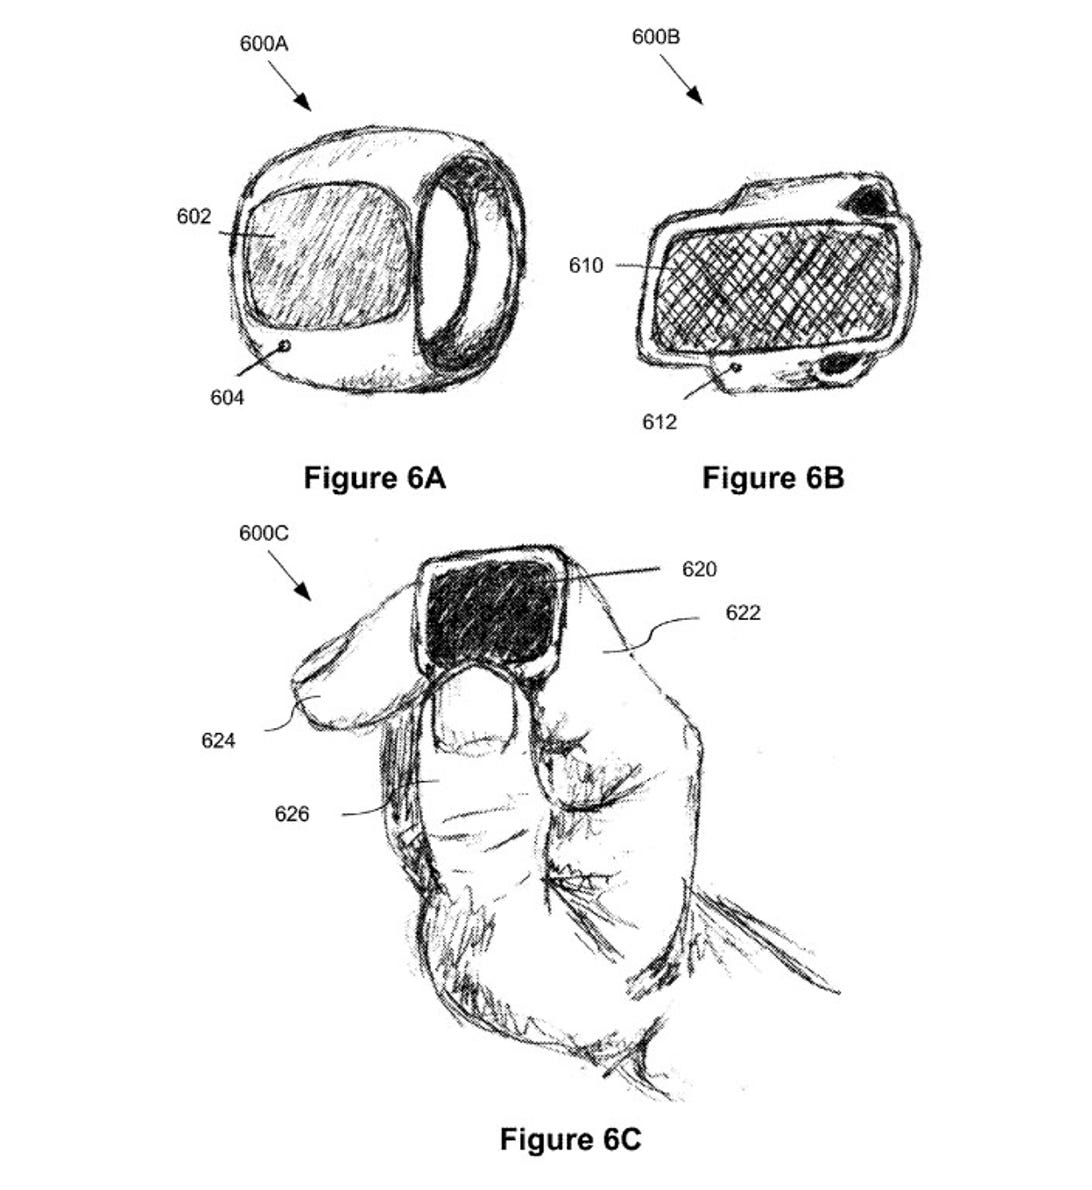 zdnet-apple-future-patent-apple-ring.jpg